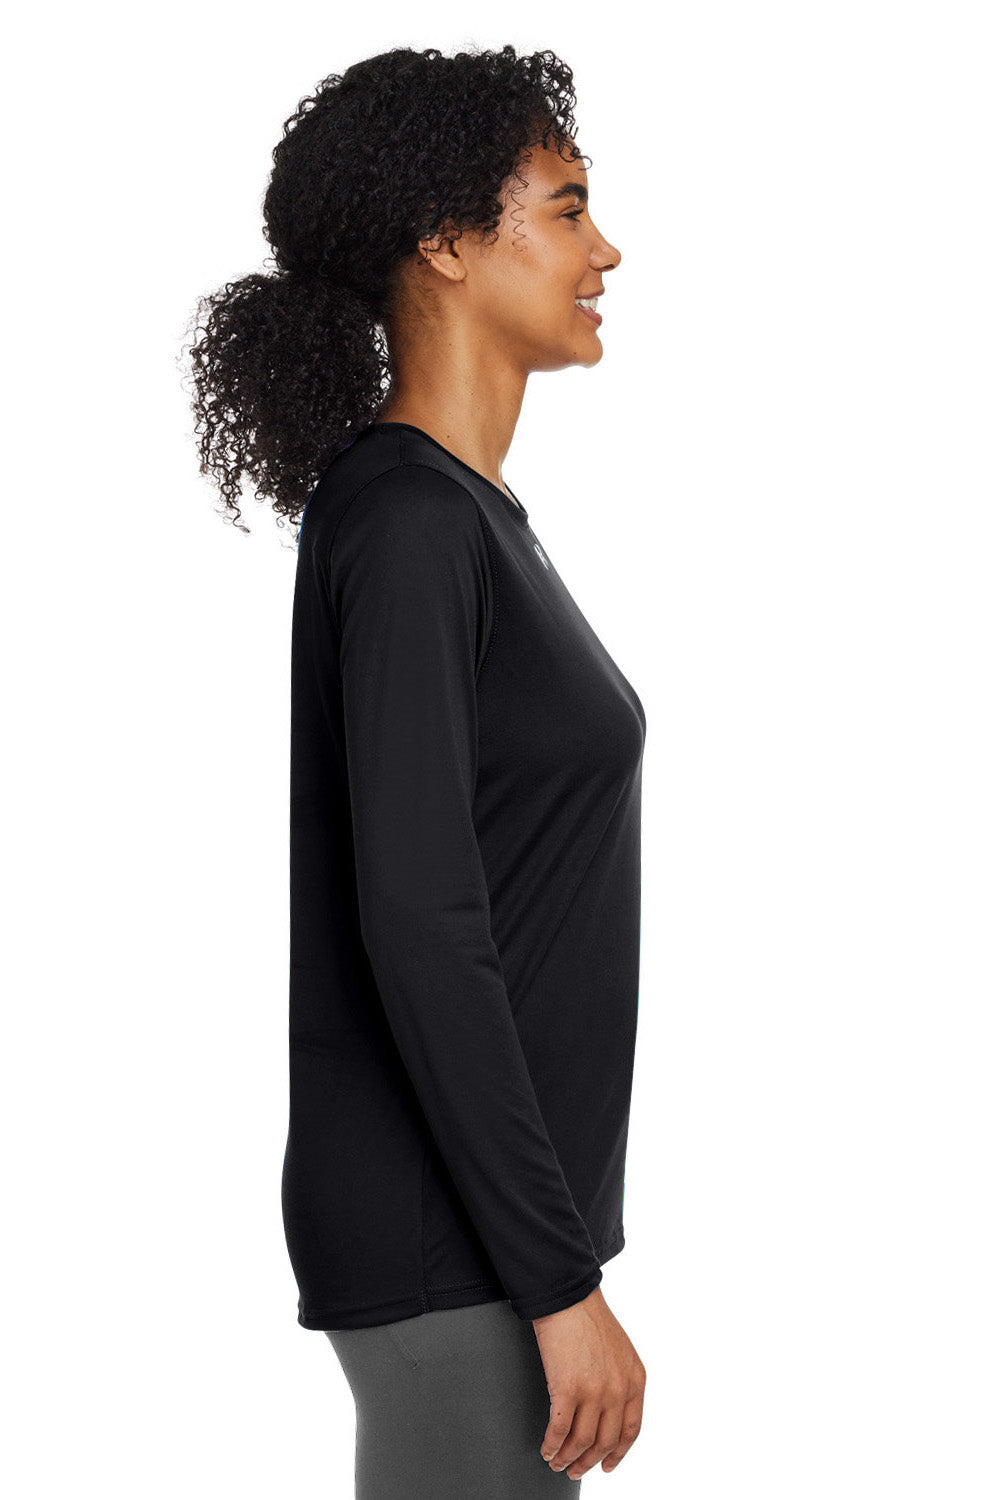 Under Armour 1376852 Womens Team Tech Moisture Wicking Long Sleeve Crewneck T-Shirt Black Model Side